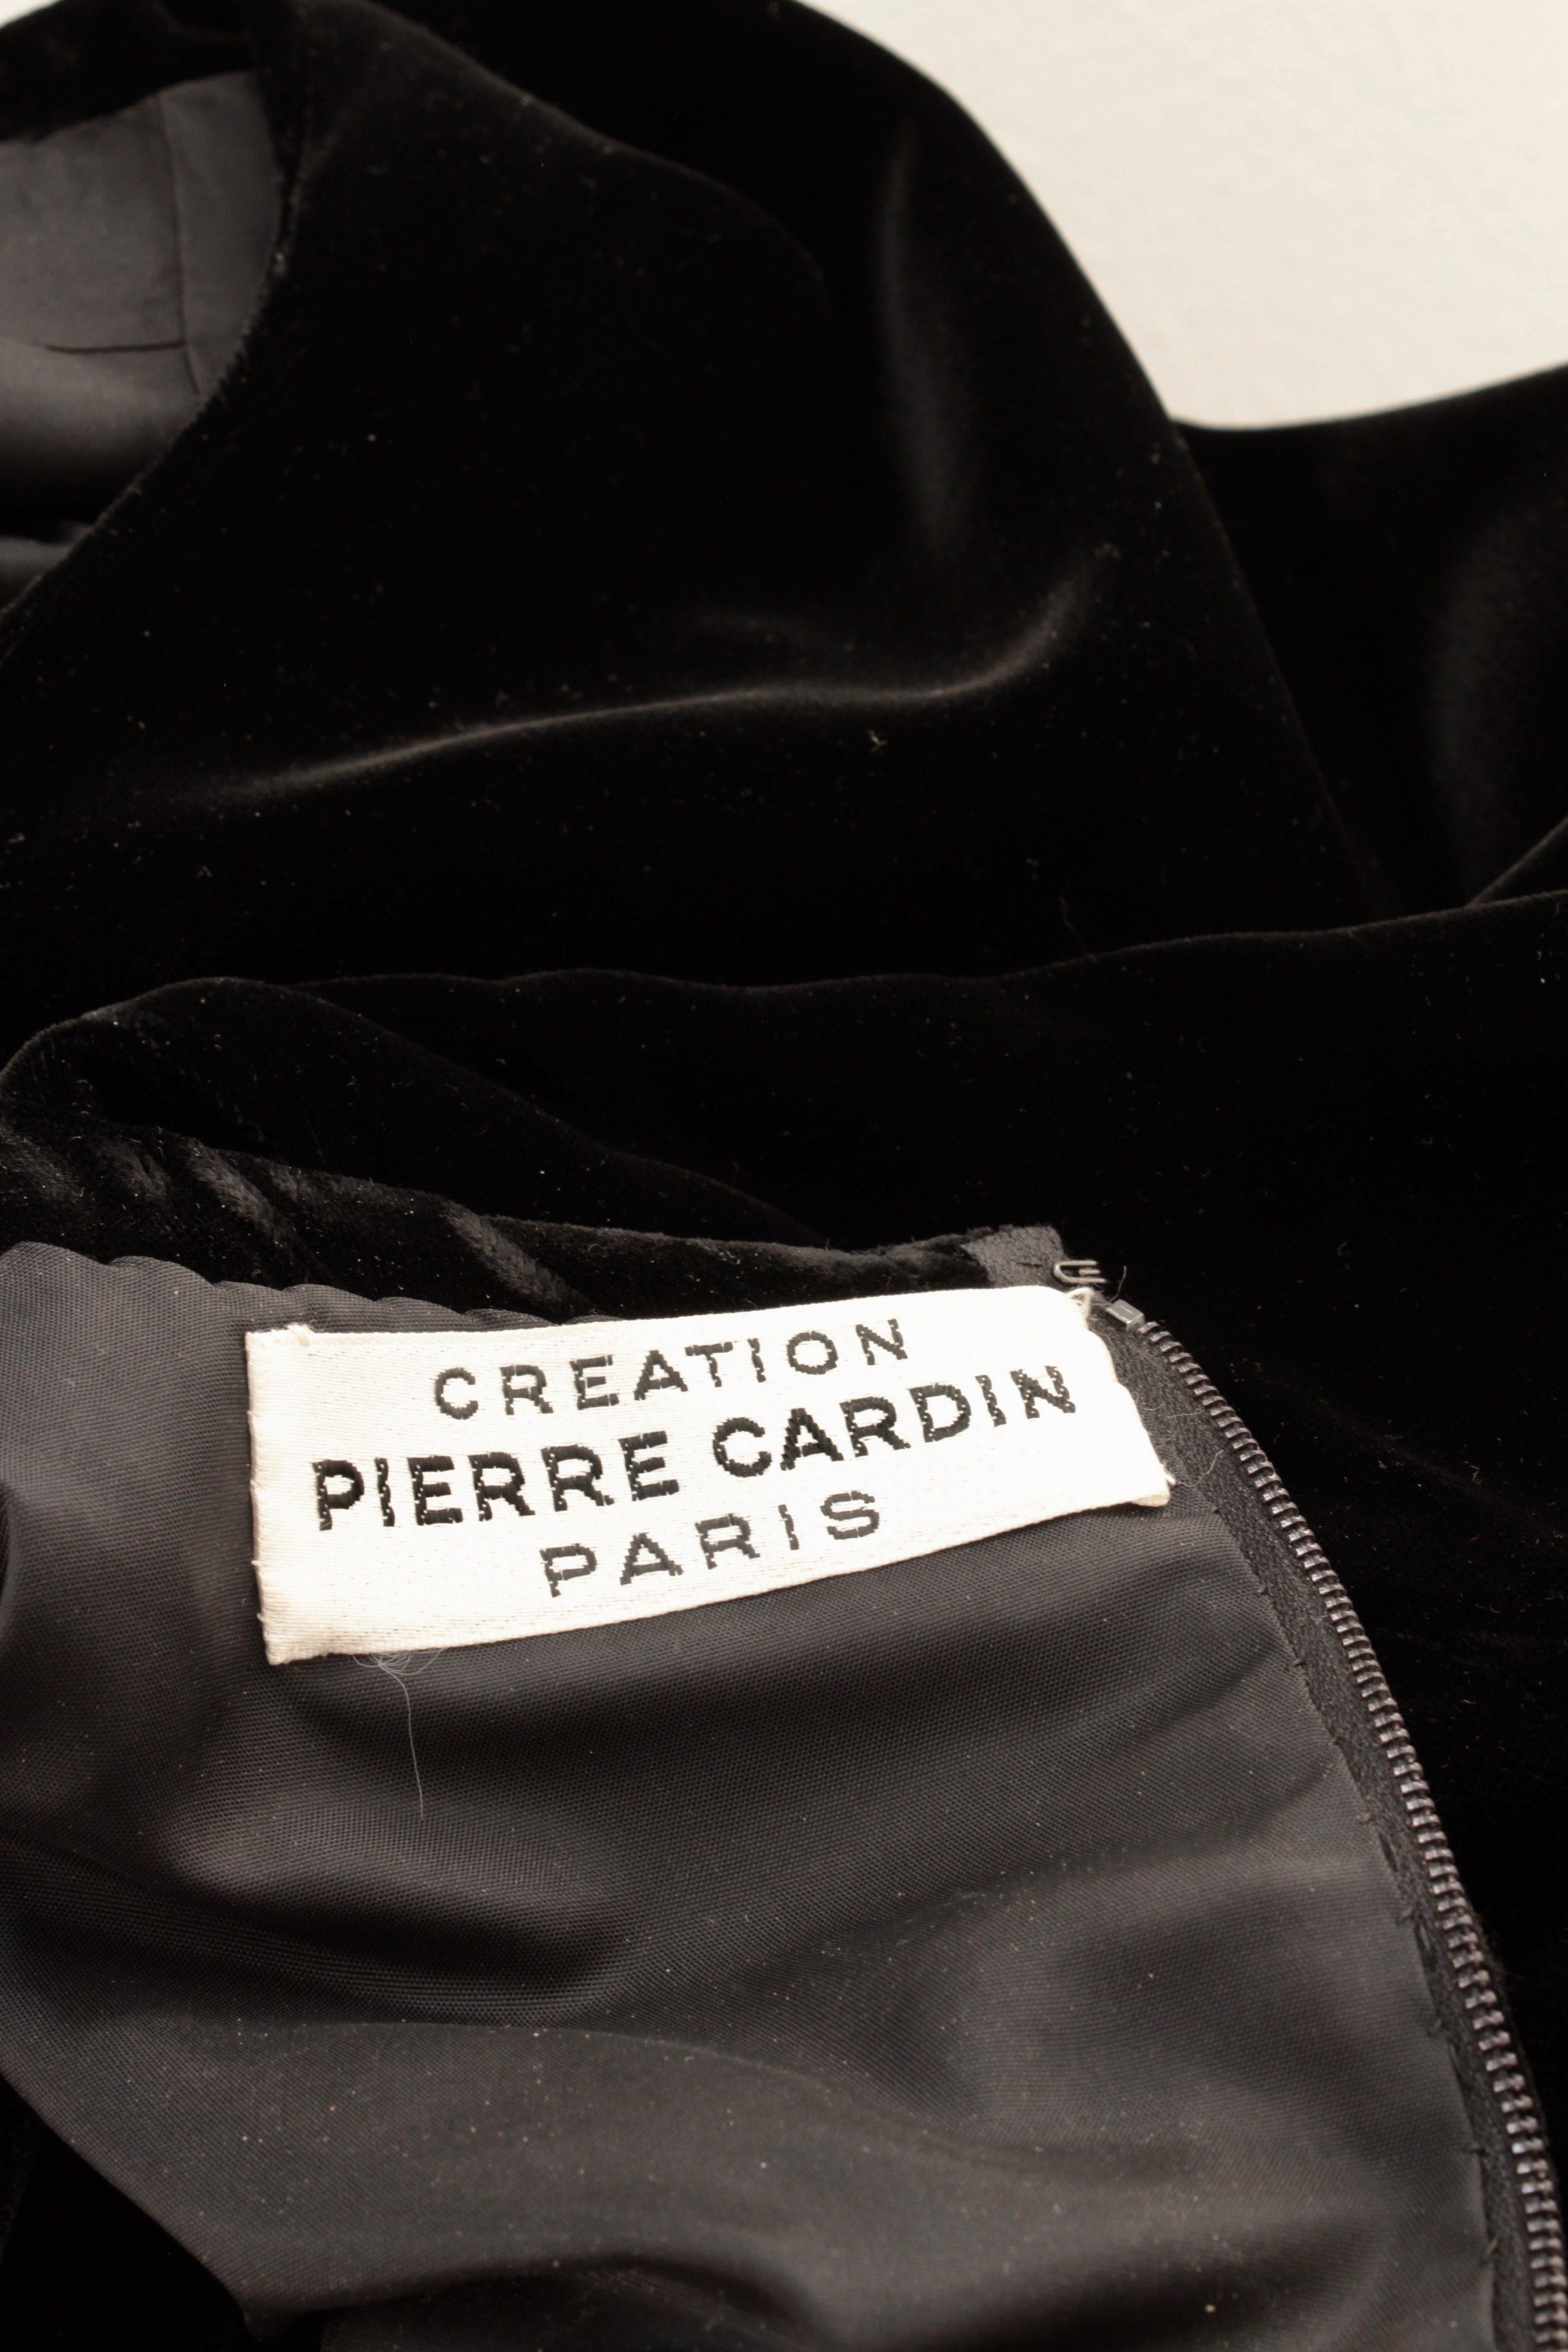 Pierre Cardin Evening Gown Panel Hem Rocket Dress Space Age & Futurism 1969  1